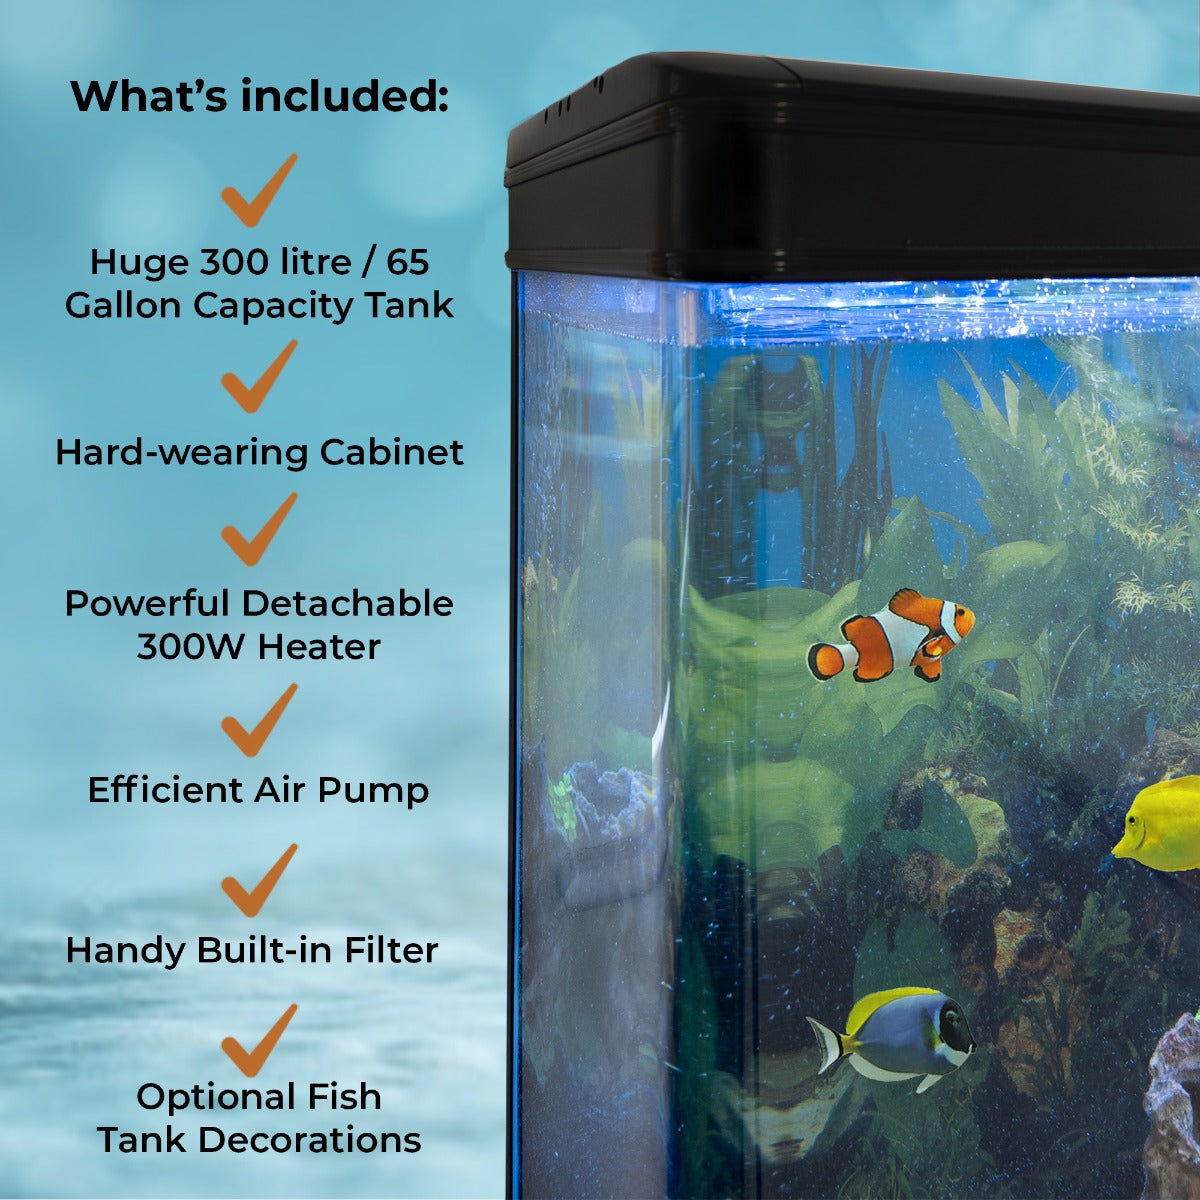 Aquarium Fish Tank & Cabinet with Complete Starter Kit - Black Tank & Black Gravel